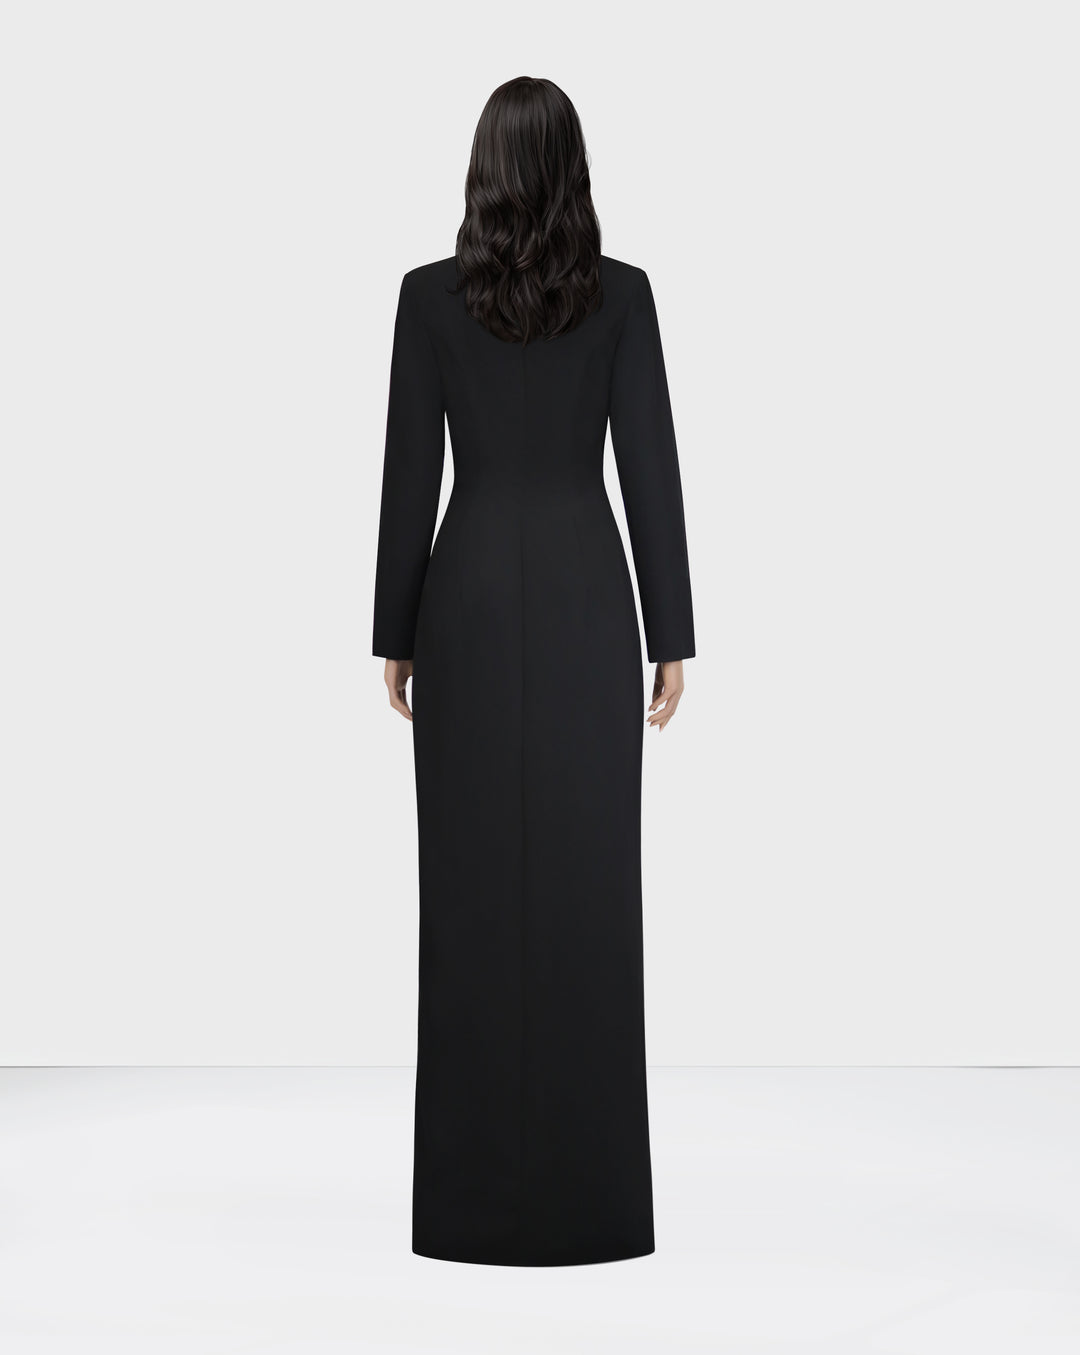 Blazer black dress with beaded shoulders